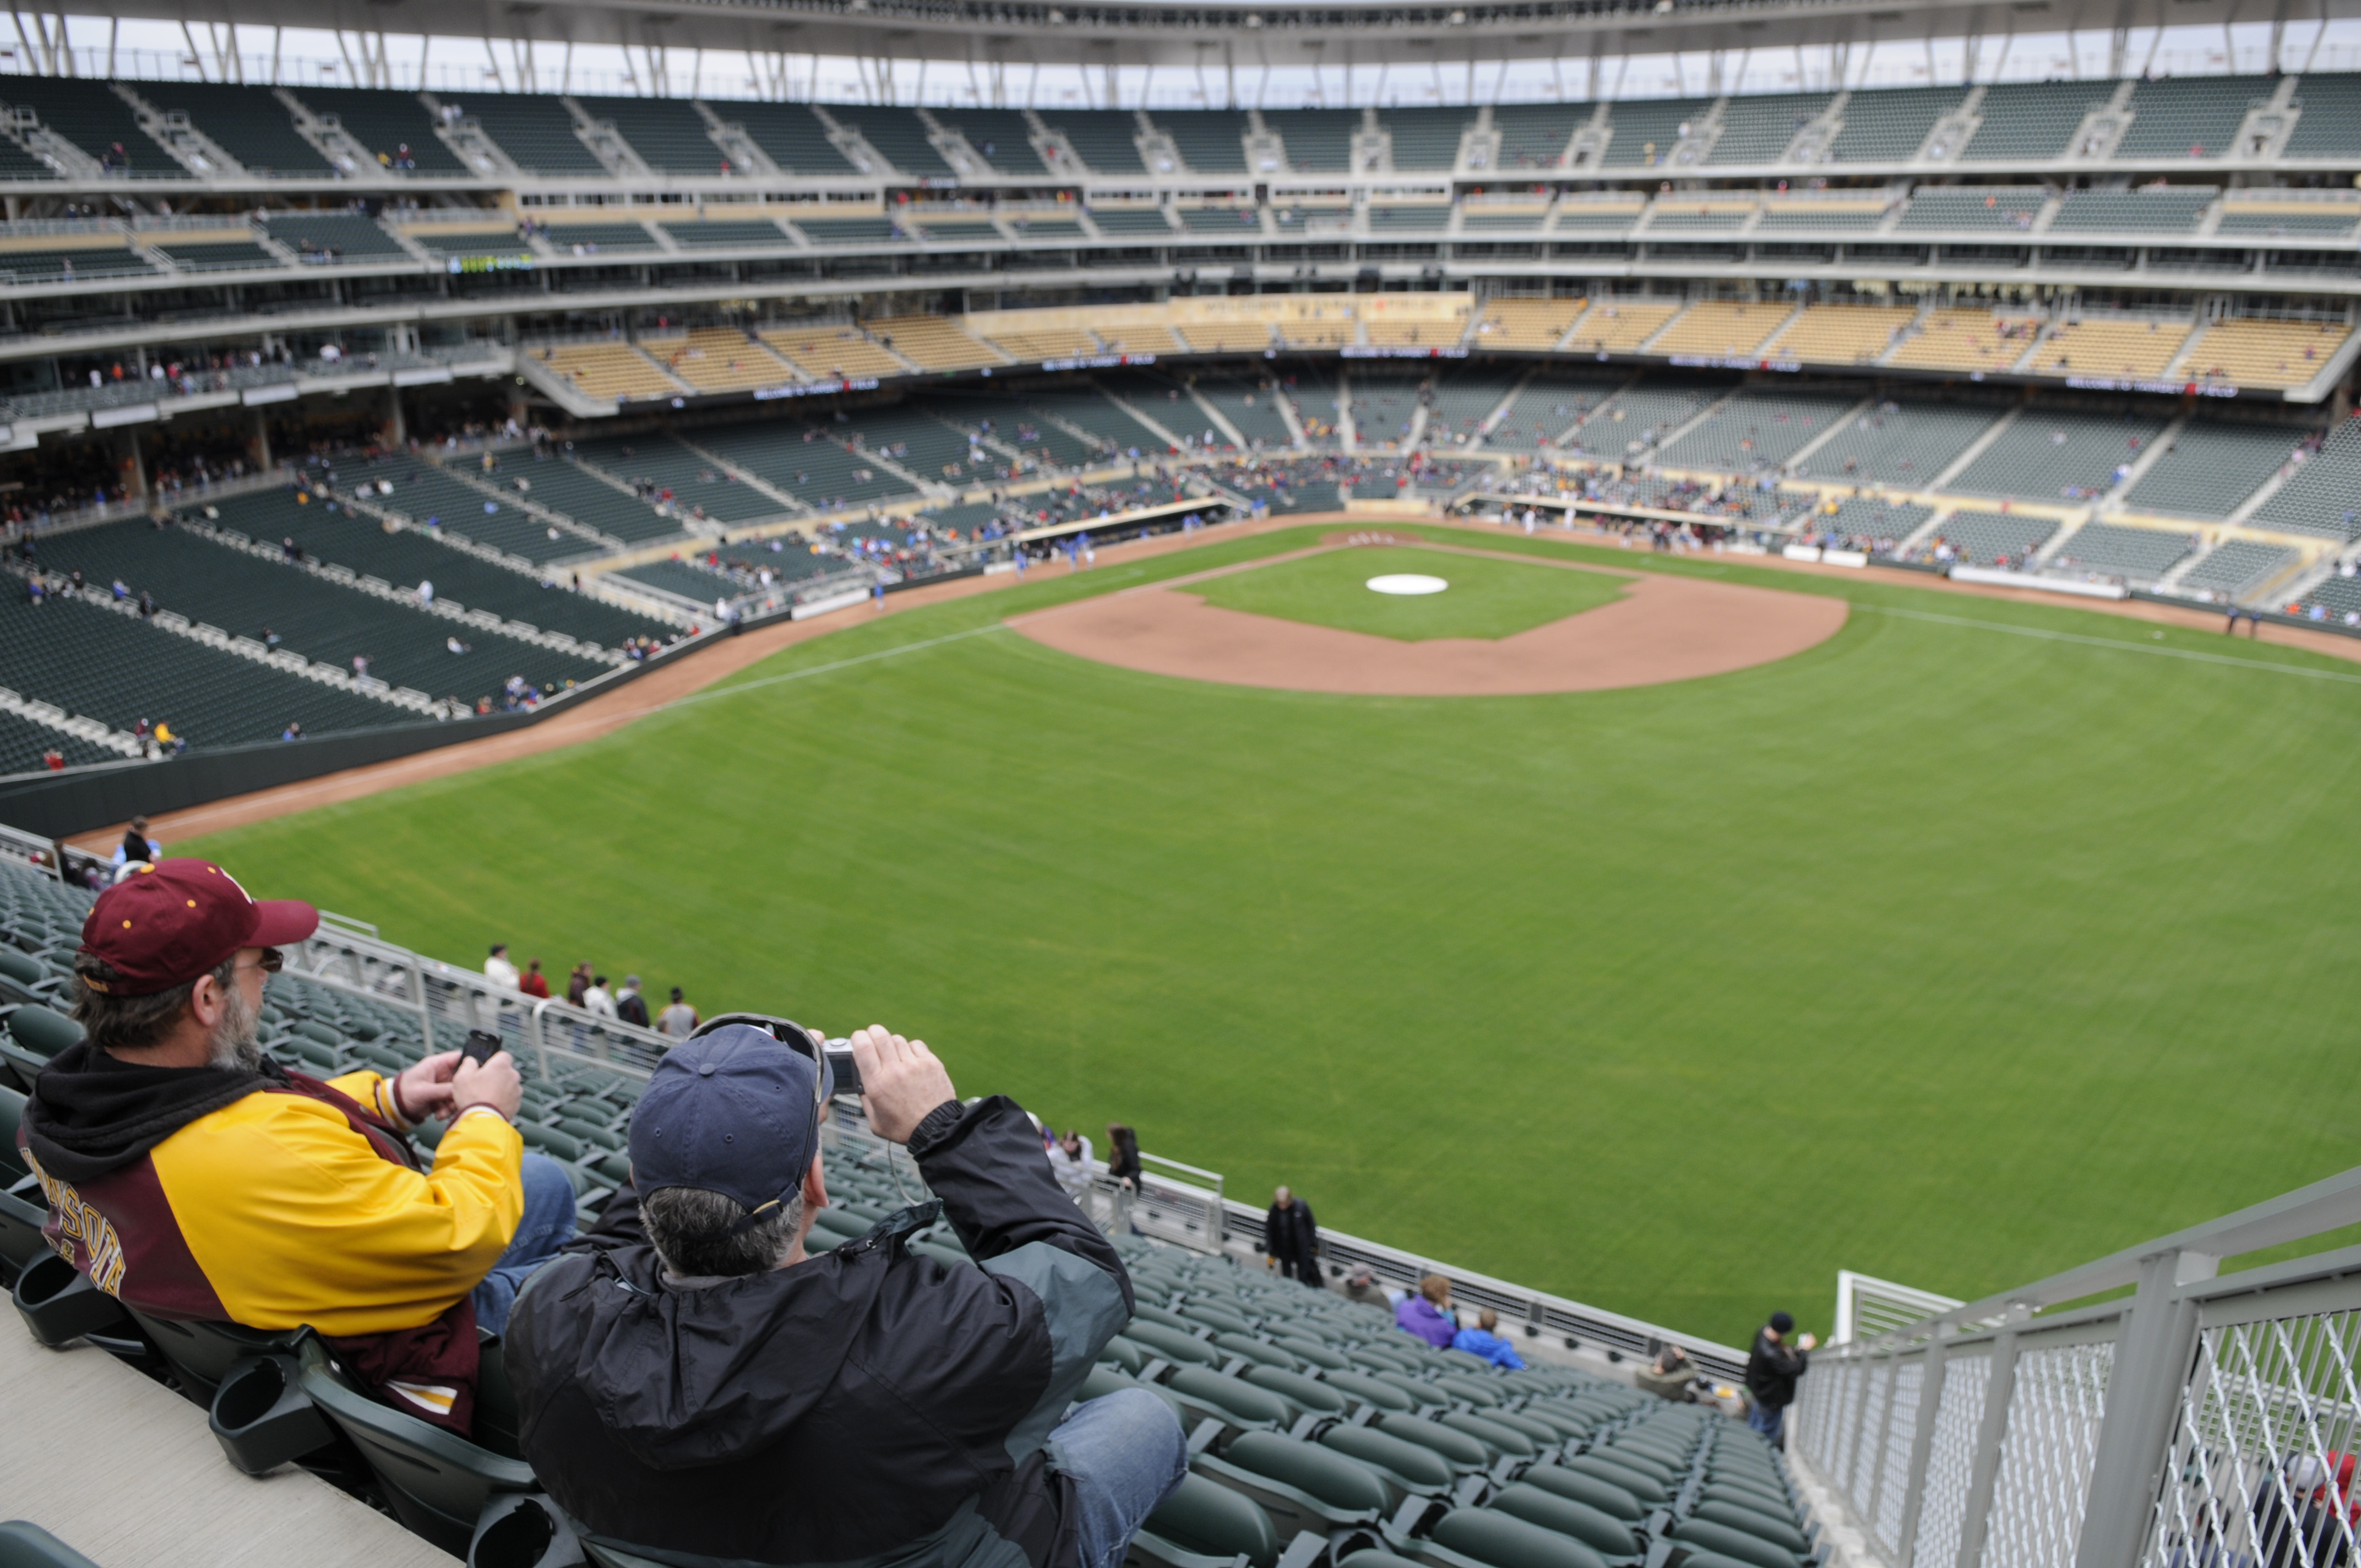 Ballparks of Baseball – Your Guide to Major League Baseball Stadiums